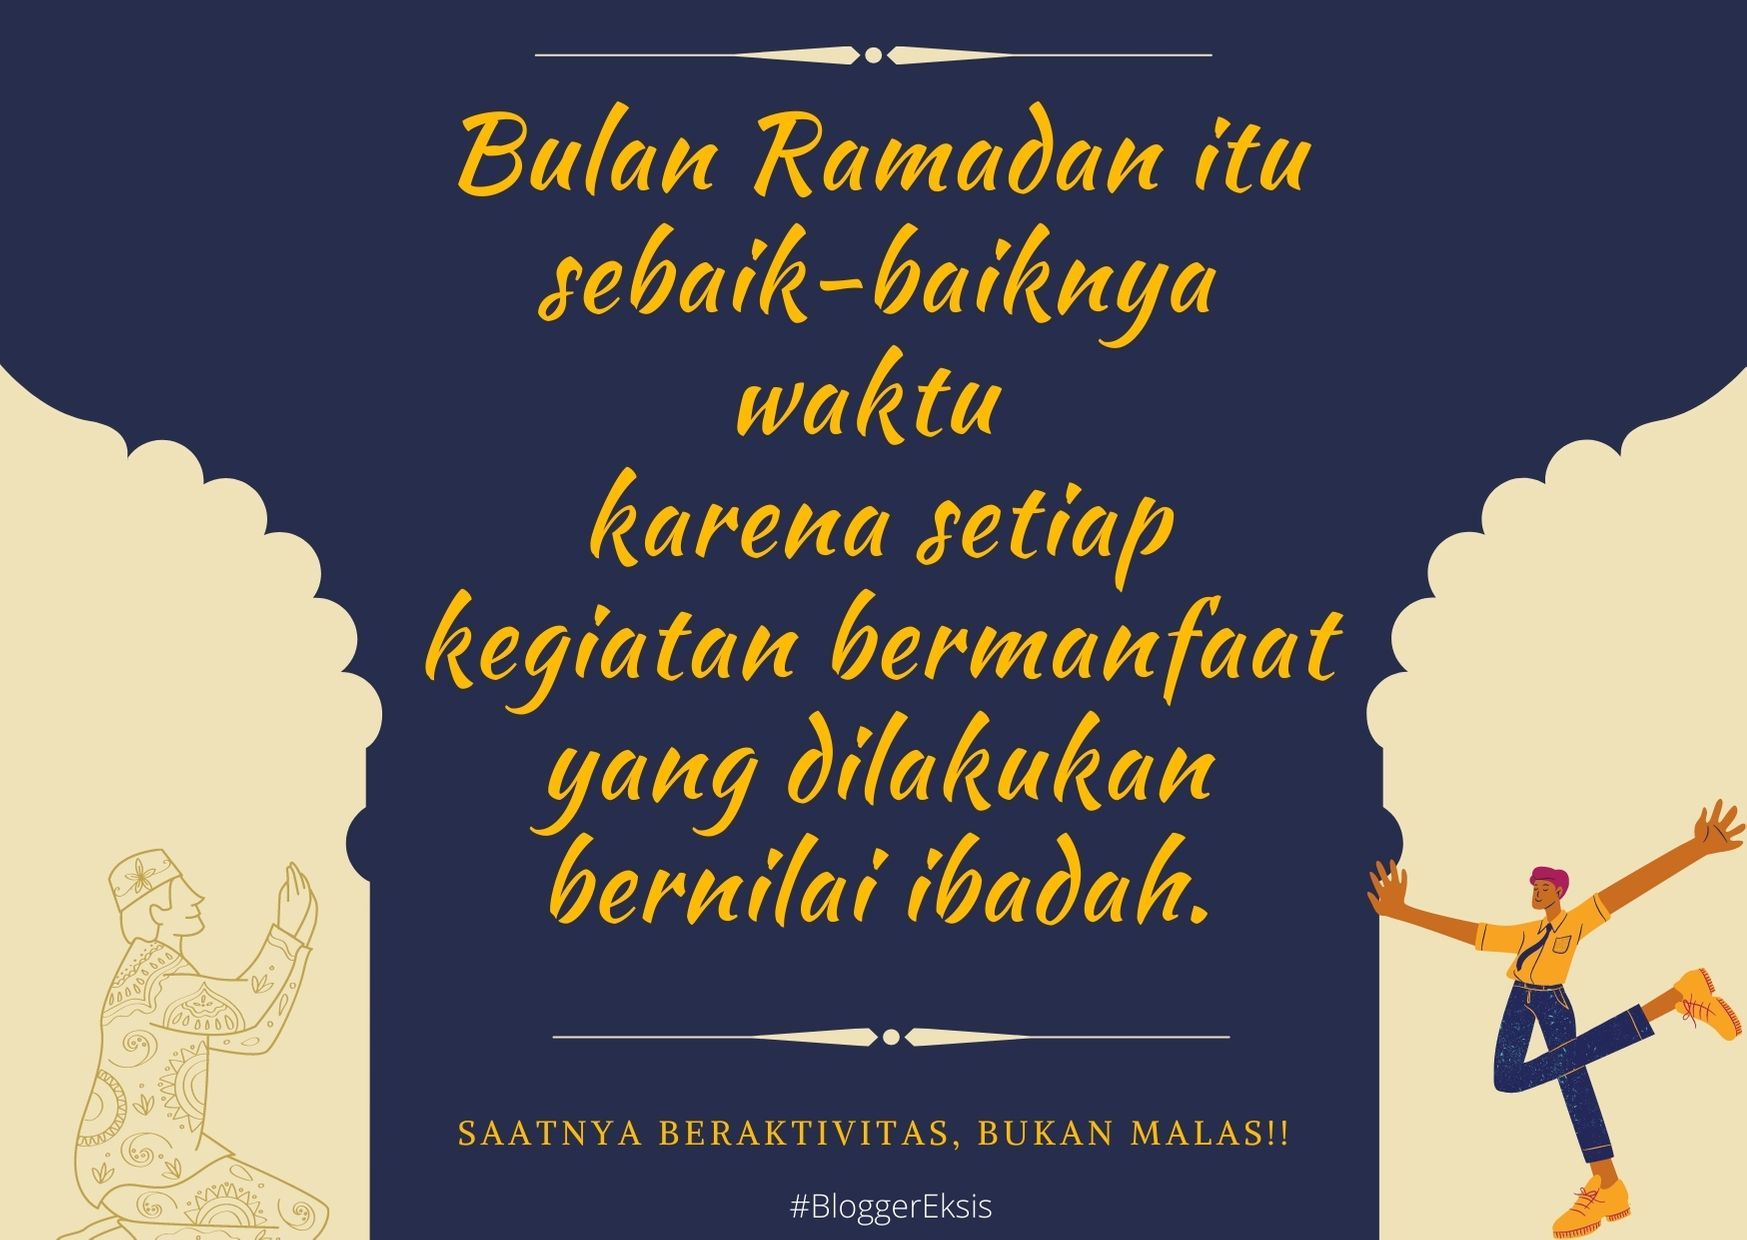 Aktivitas ramadan yang bernilai kebaikan akan dilipatgandakan pahalanya (dok. pribadi)